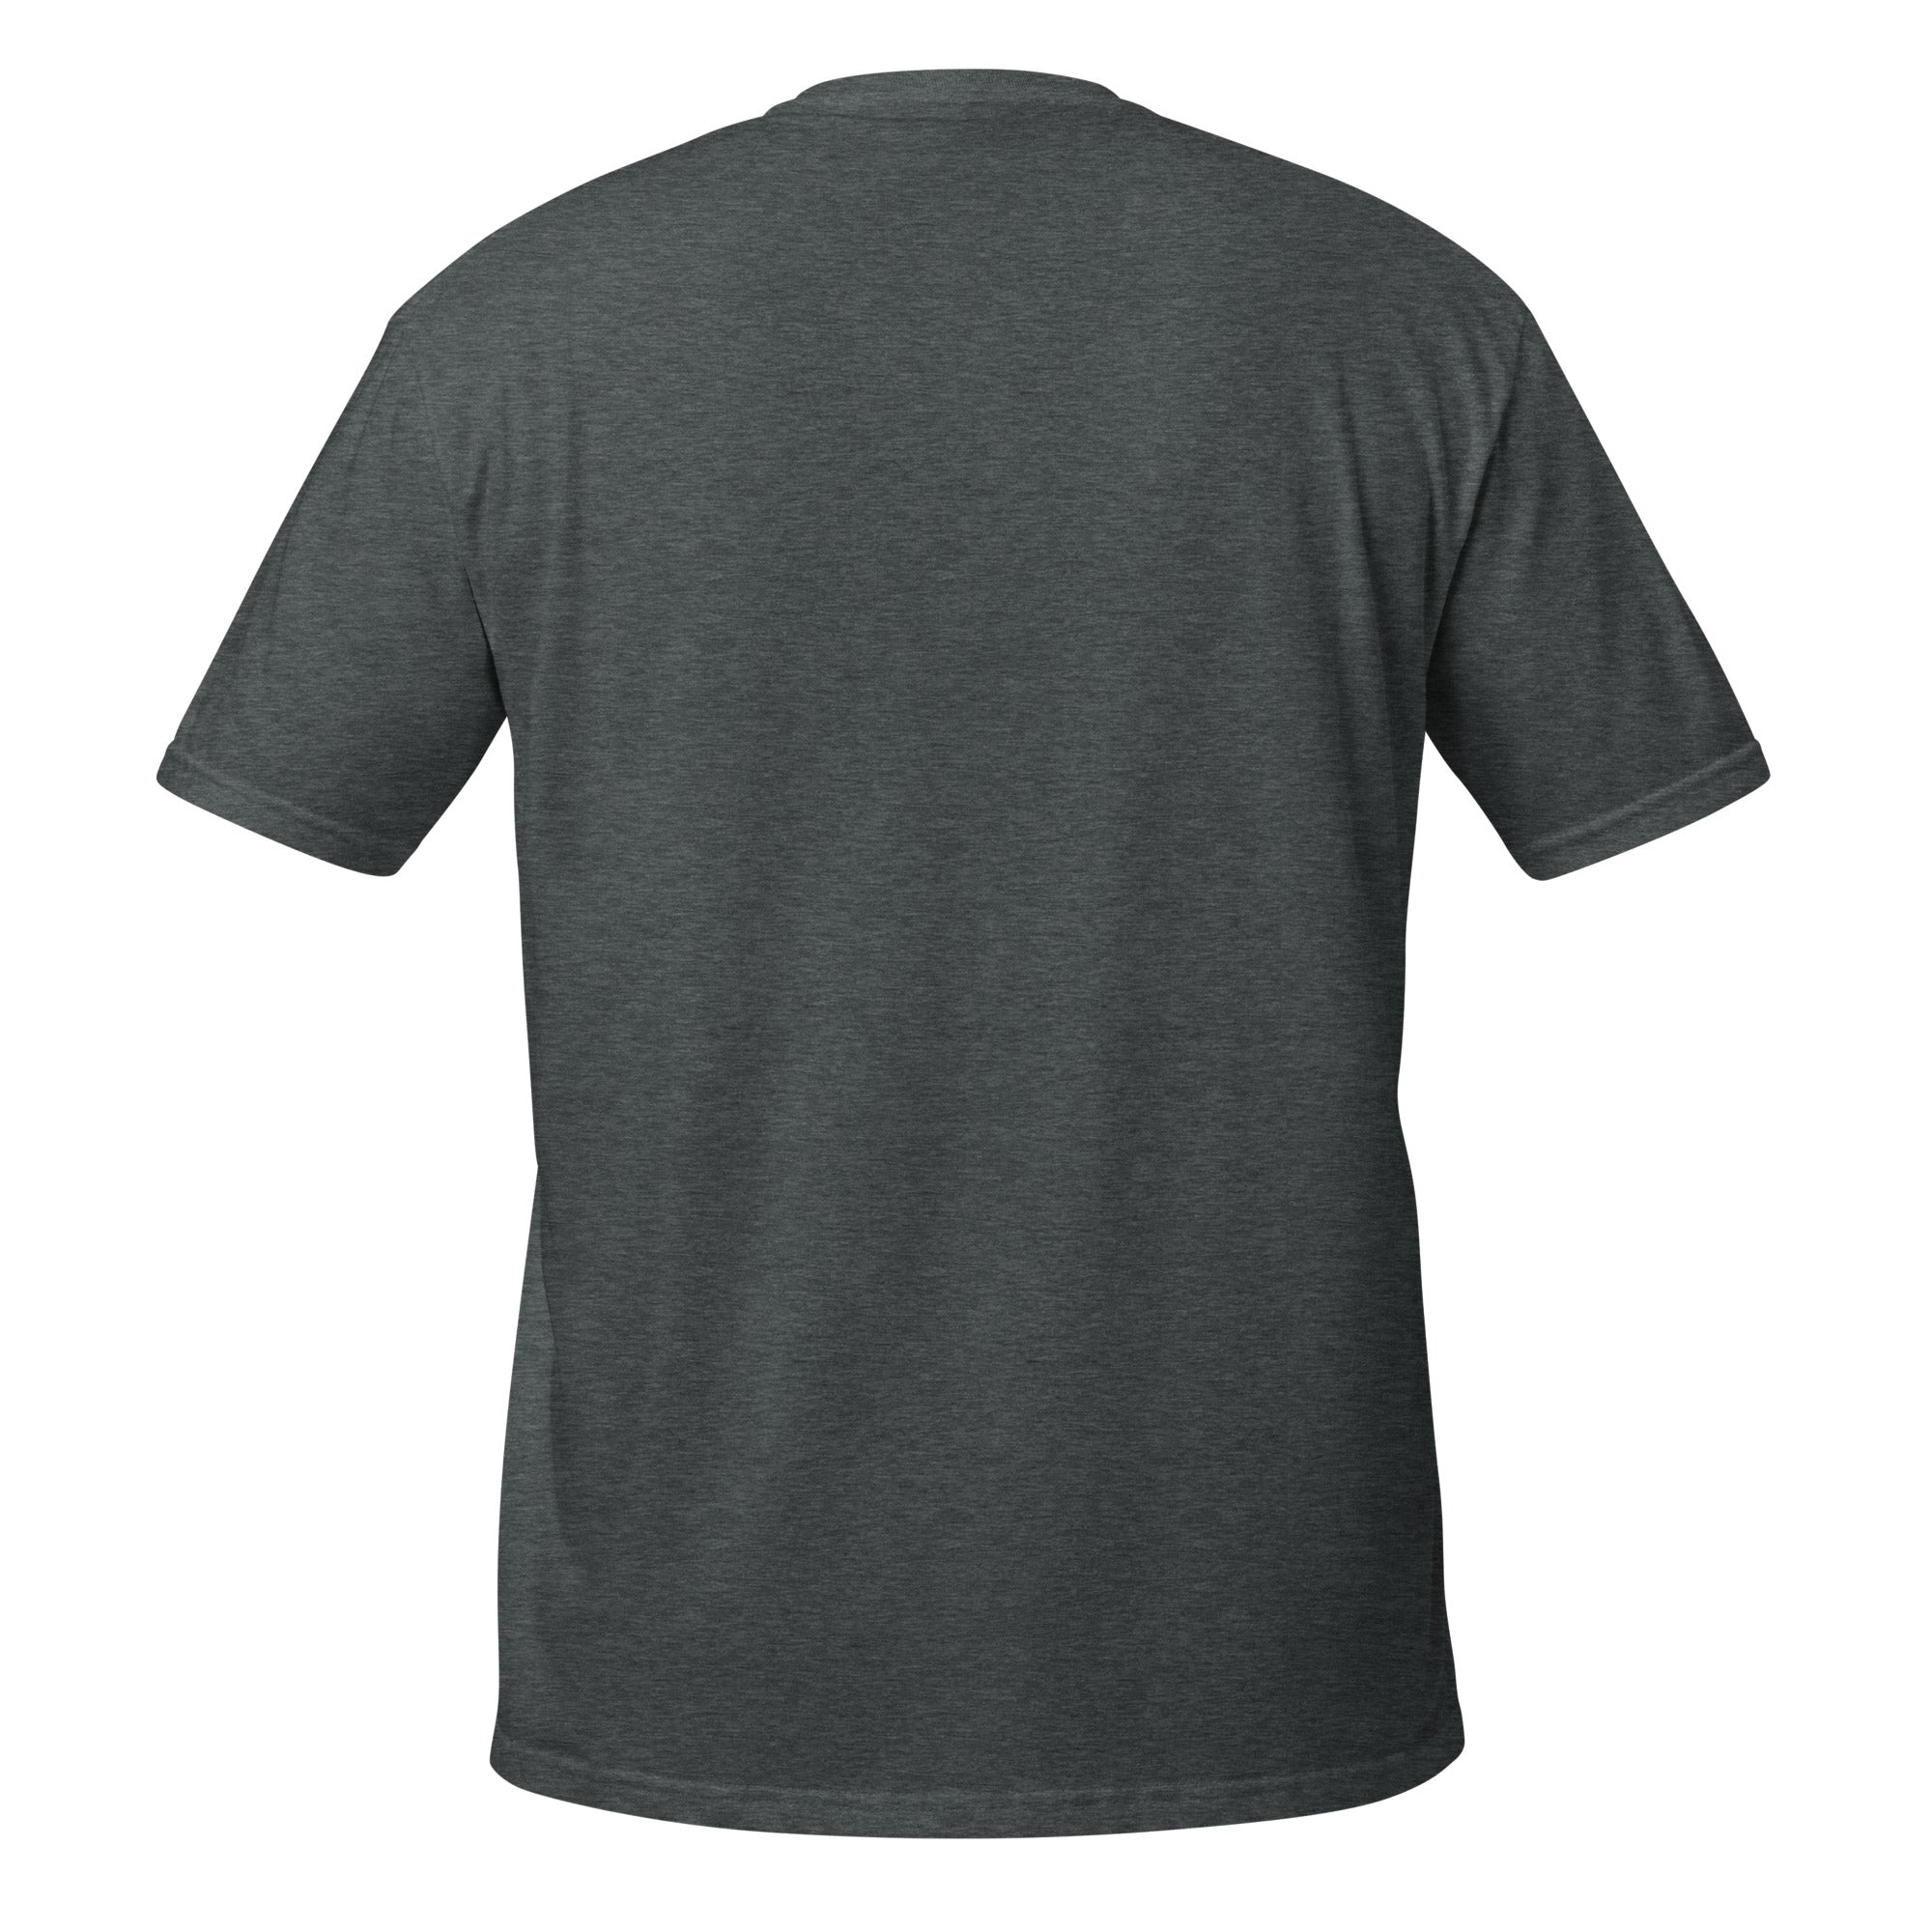 Short-Sleeve Unisex T-Shirt- Pride Tribe